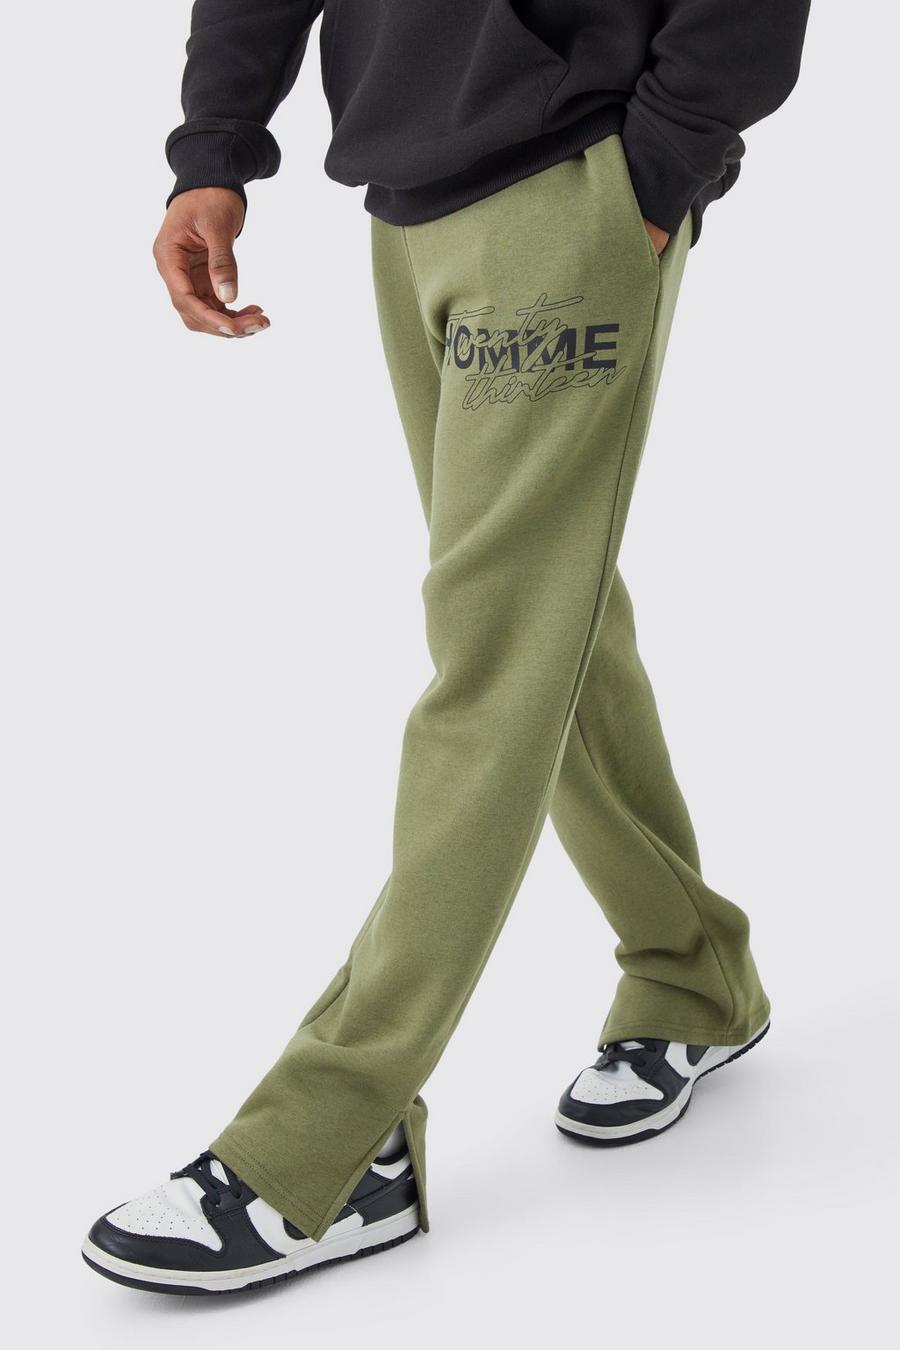 Jogginghose mit Homme-Print und geteiltem Saum, Khaki